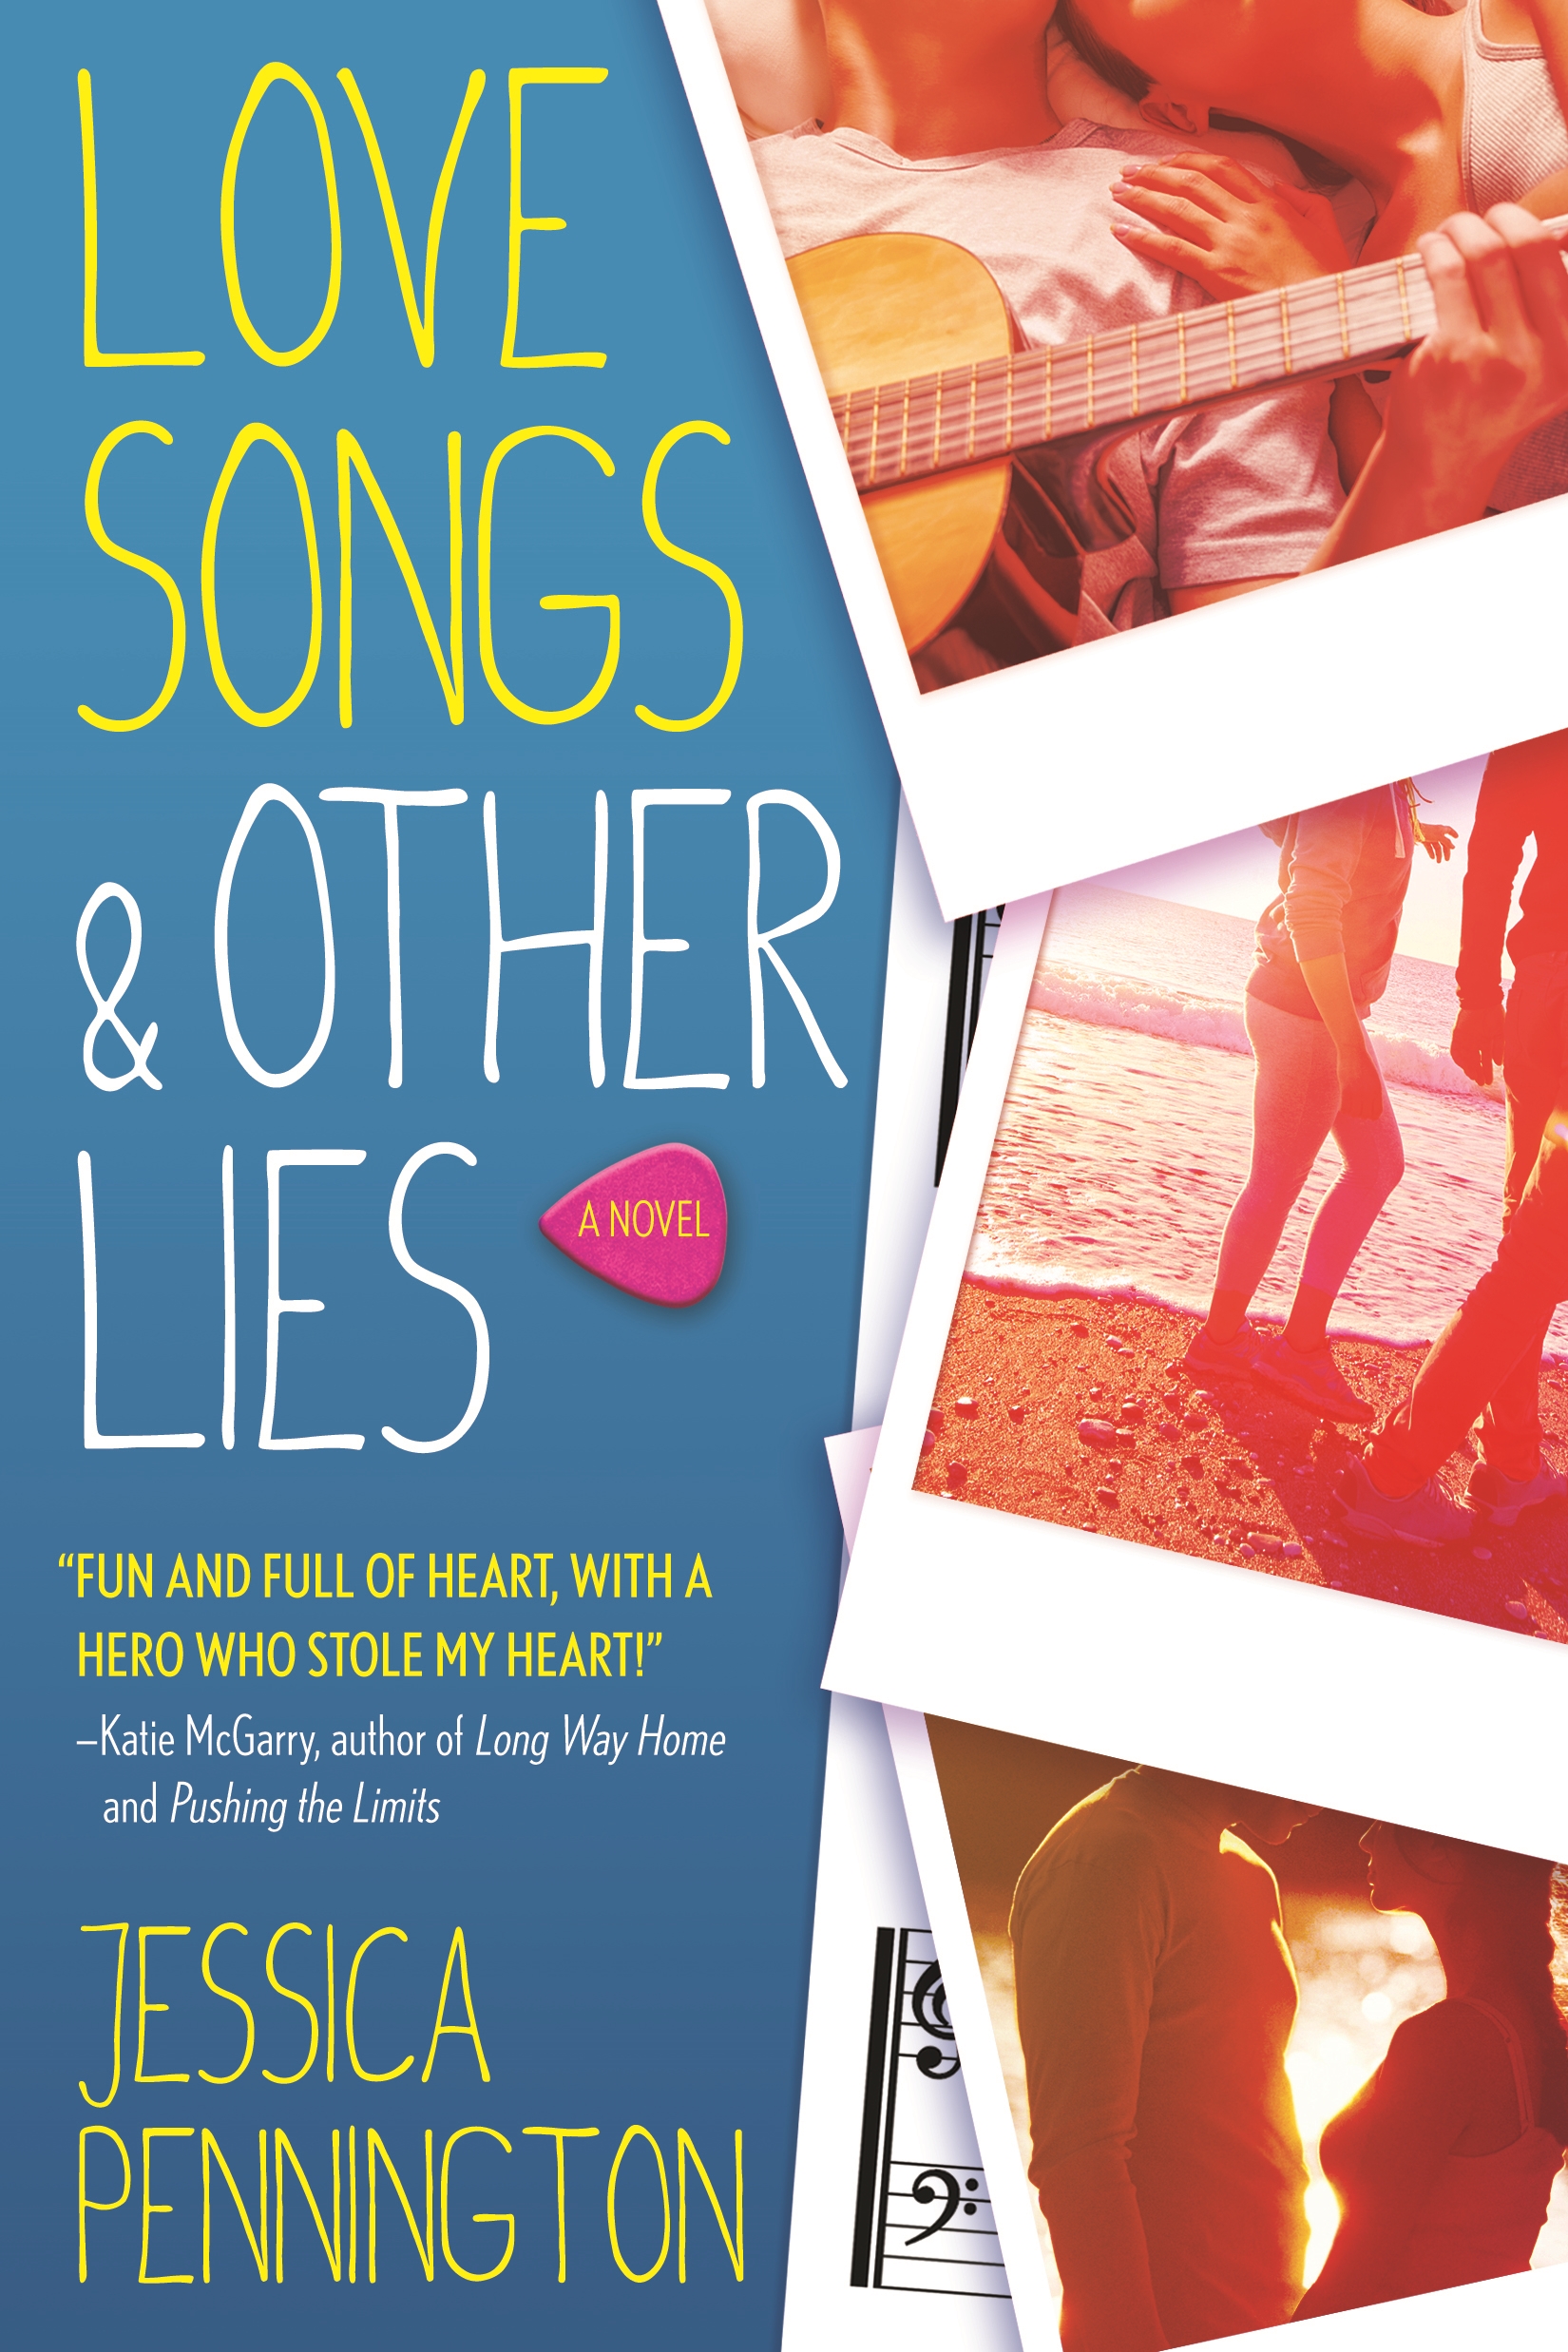 Love Songs & Other Lies : A Novel by Jessica Pennington